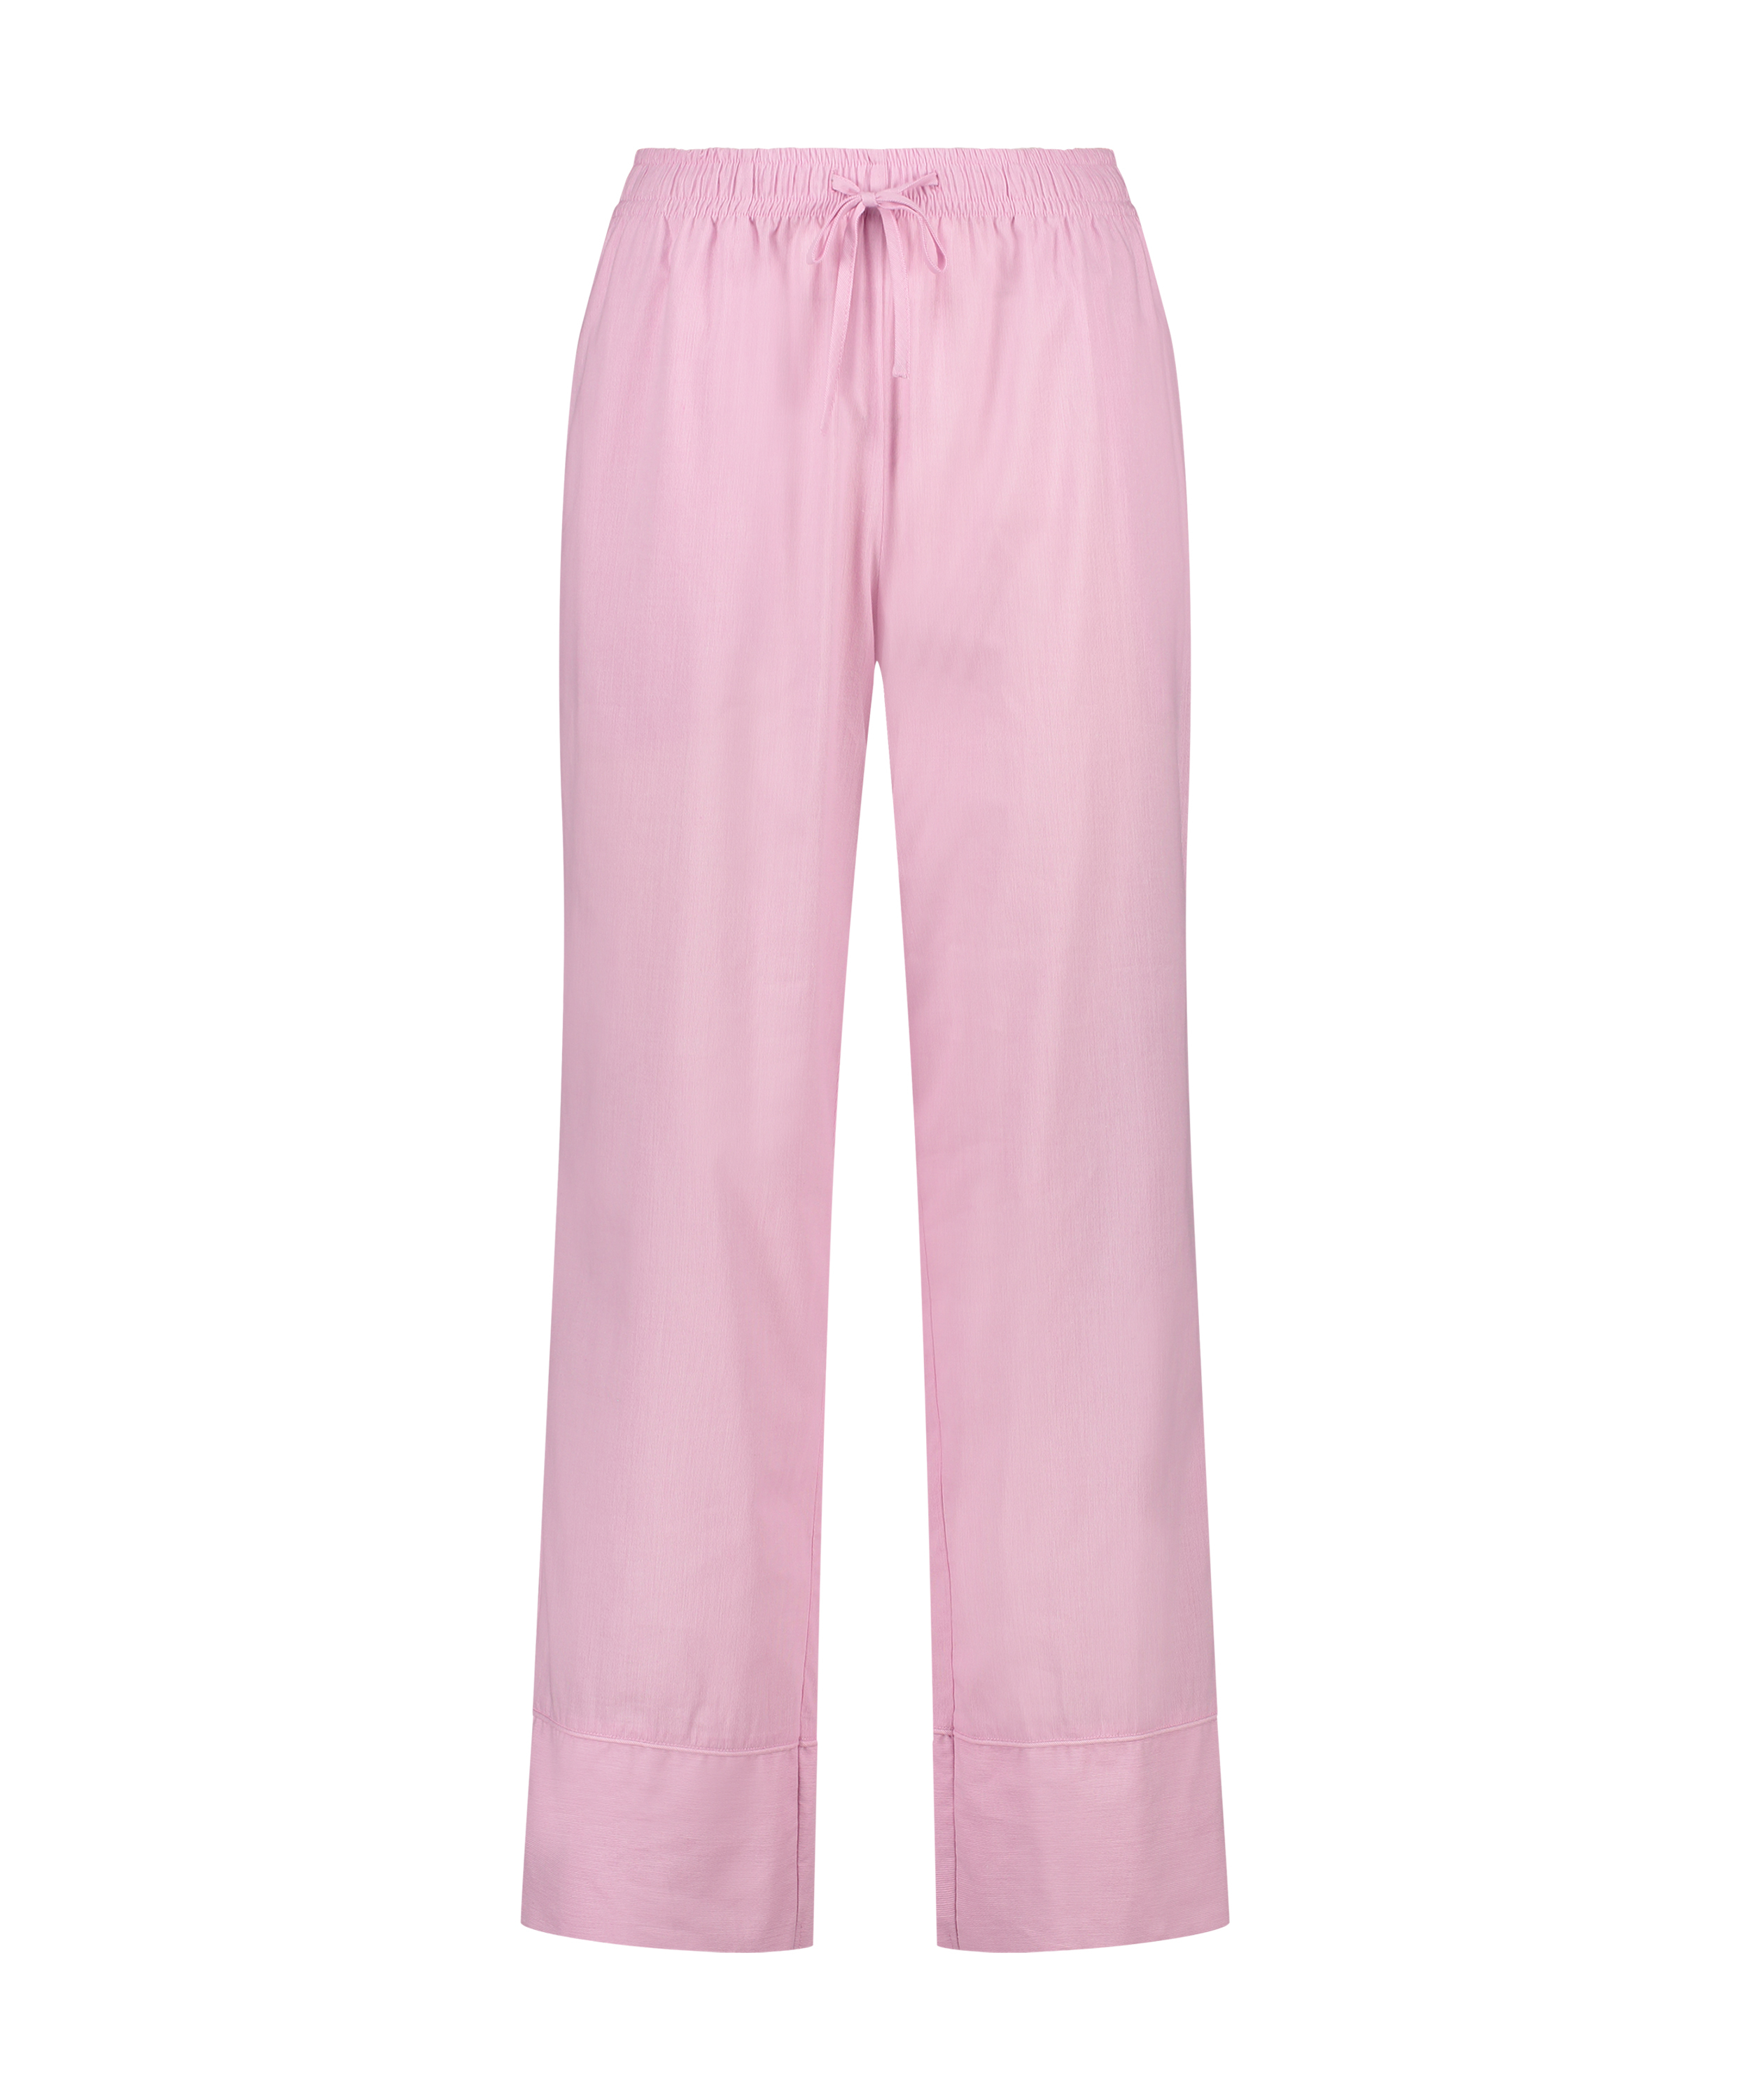 Pantalon de pyjama Stripy, Rose, main